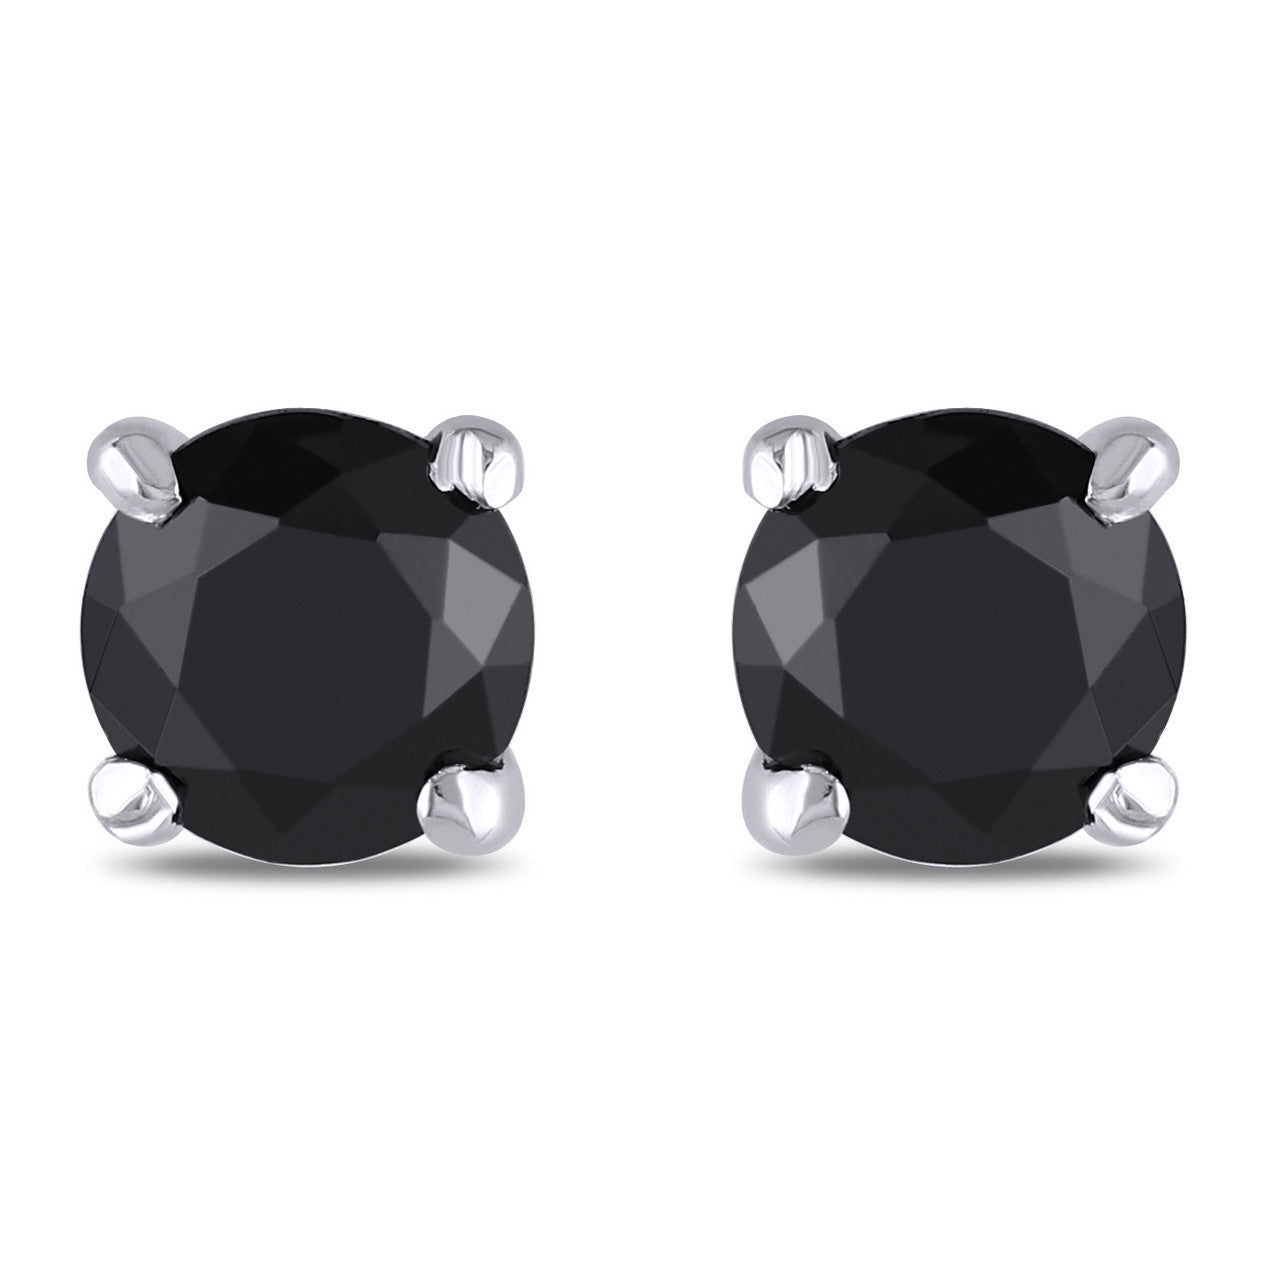 Black Diamond Jewellery